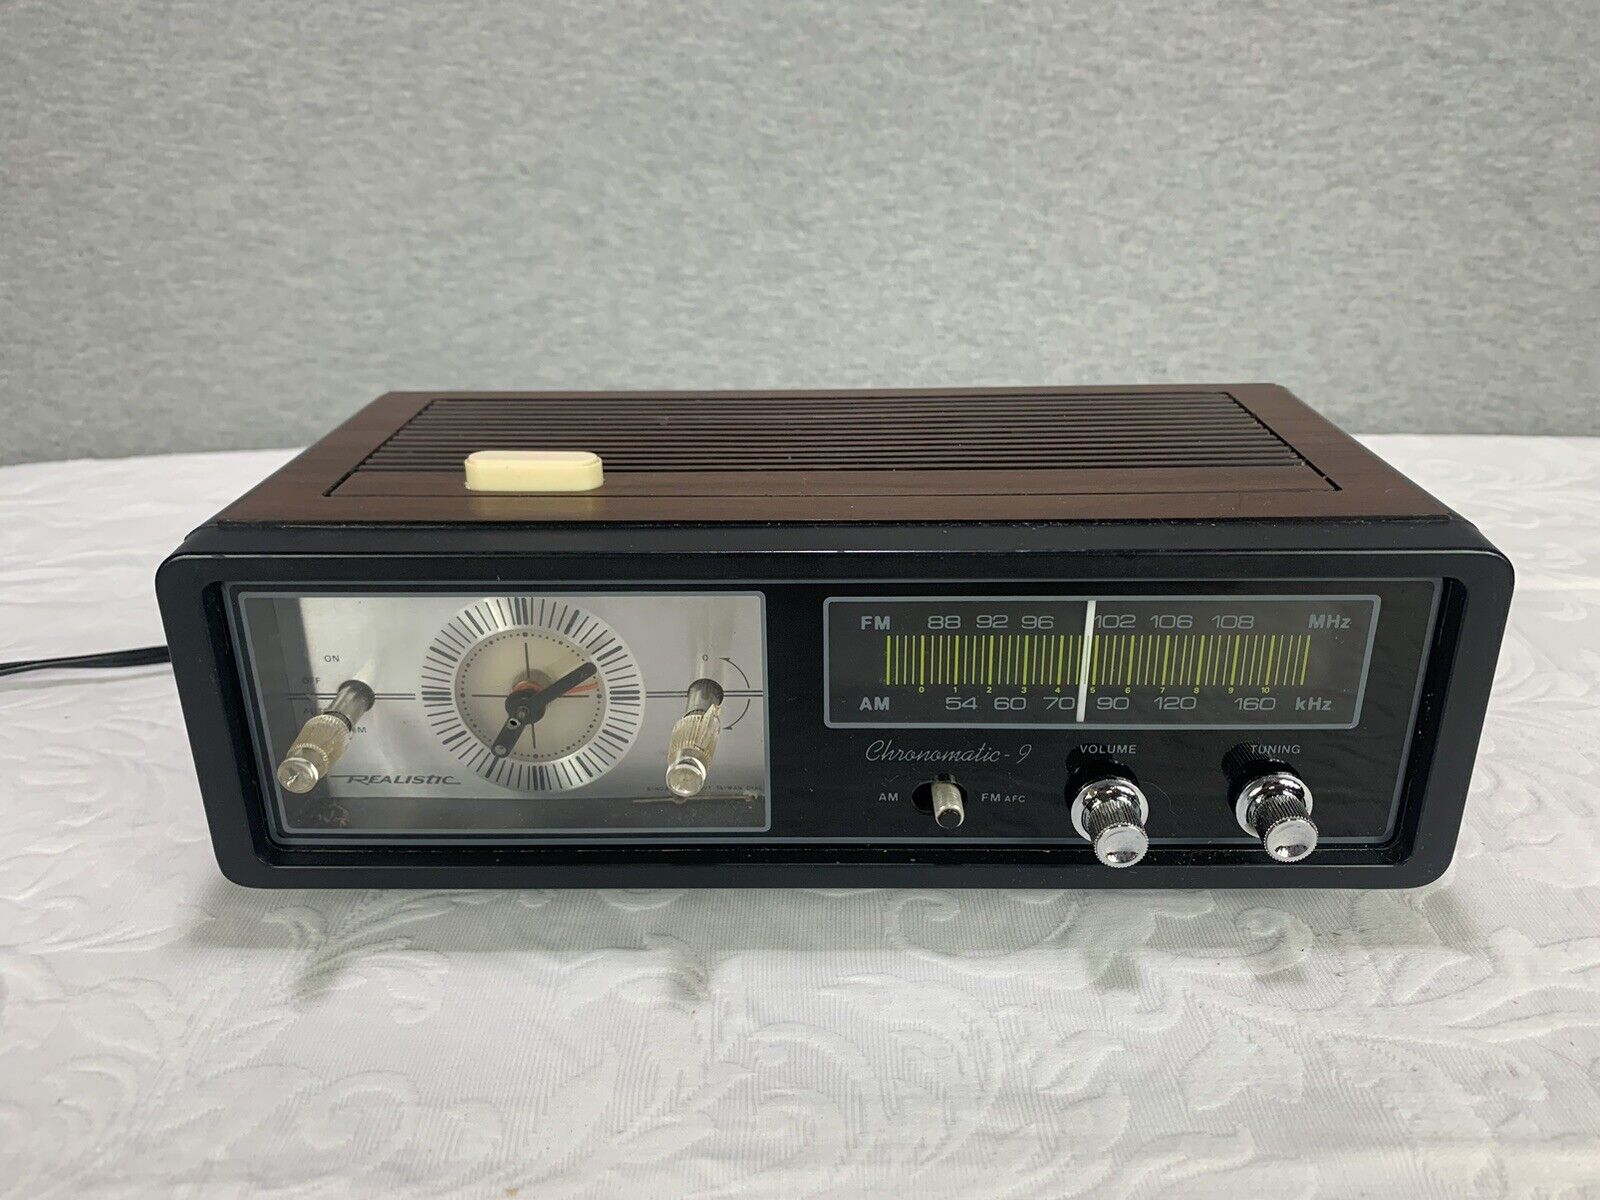 Vintage Realistic Chronomatic-9 Analog AM/FM Alarm Clock Radio Tested & Working